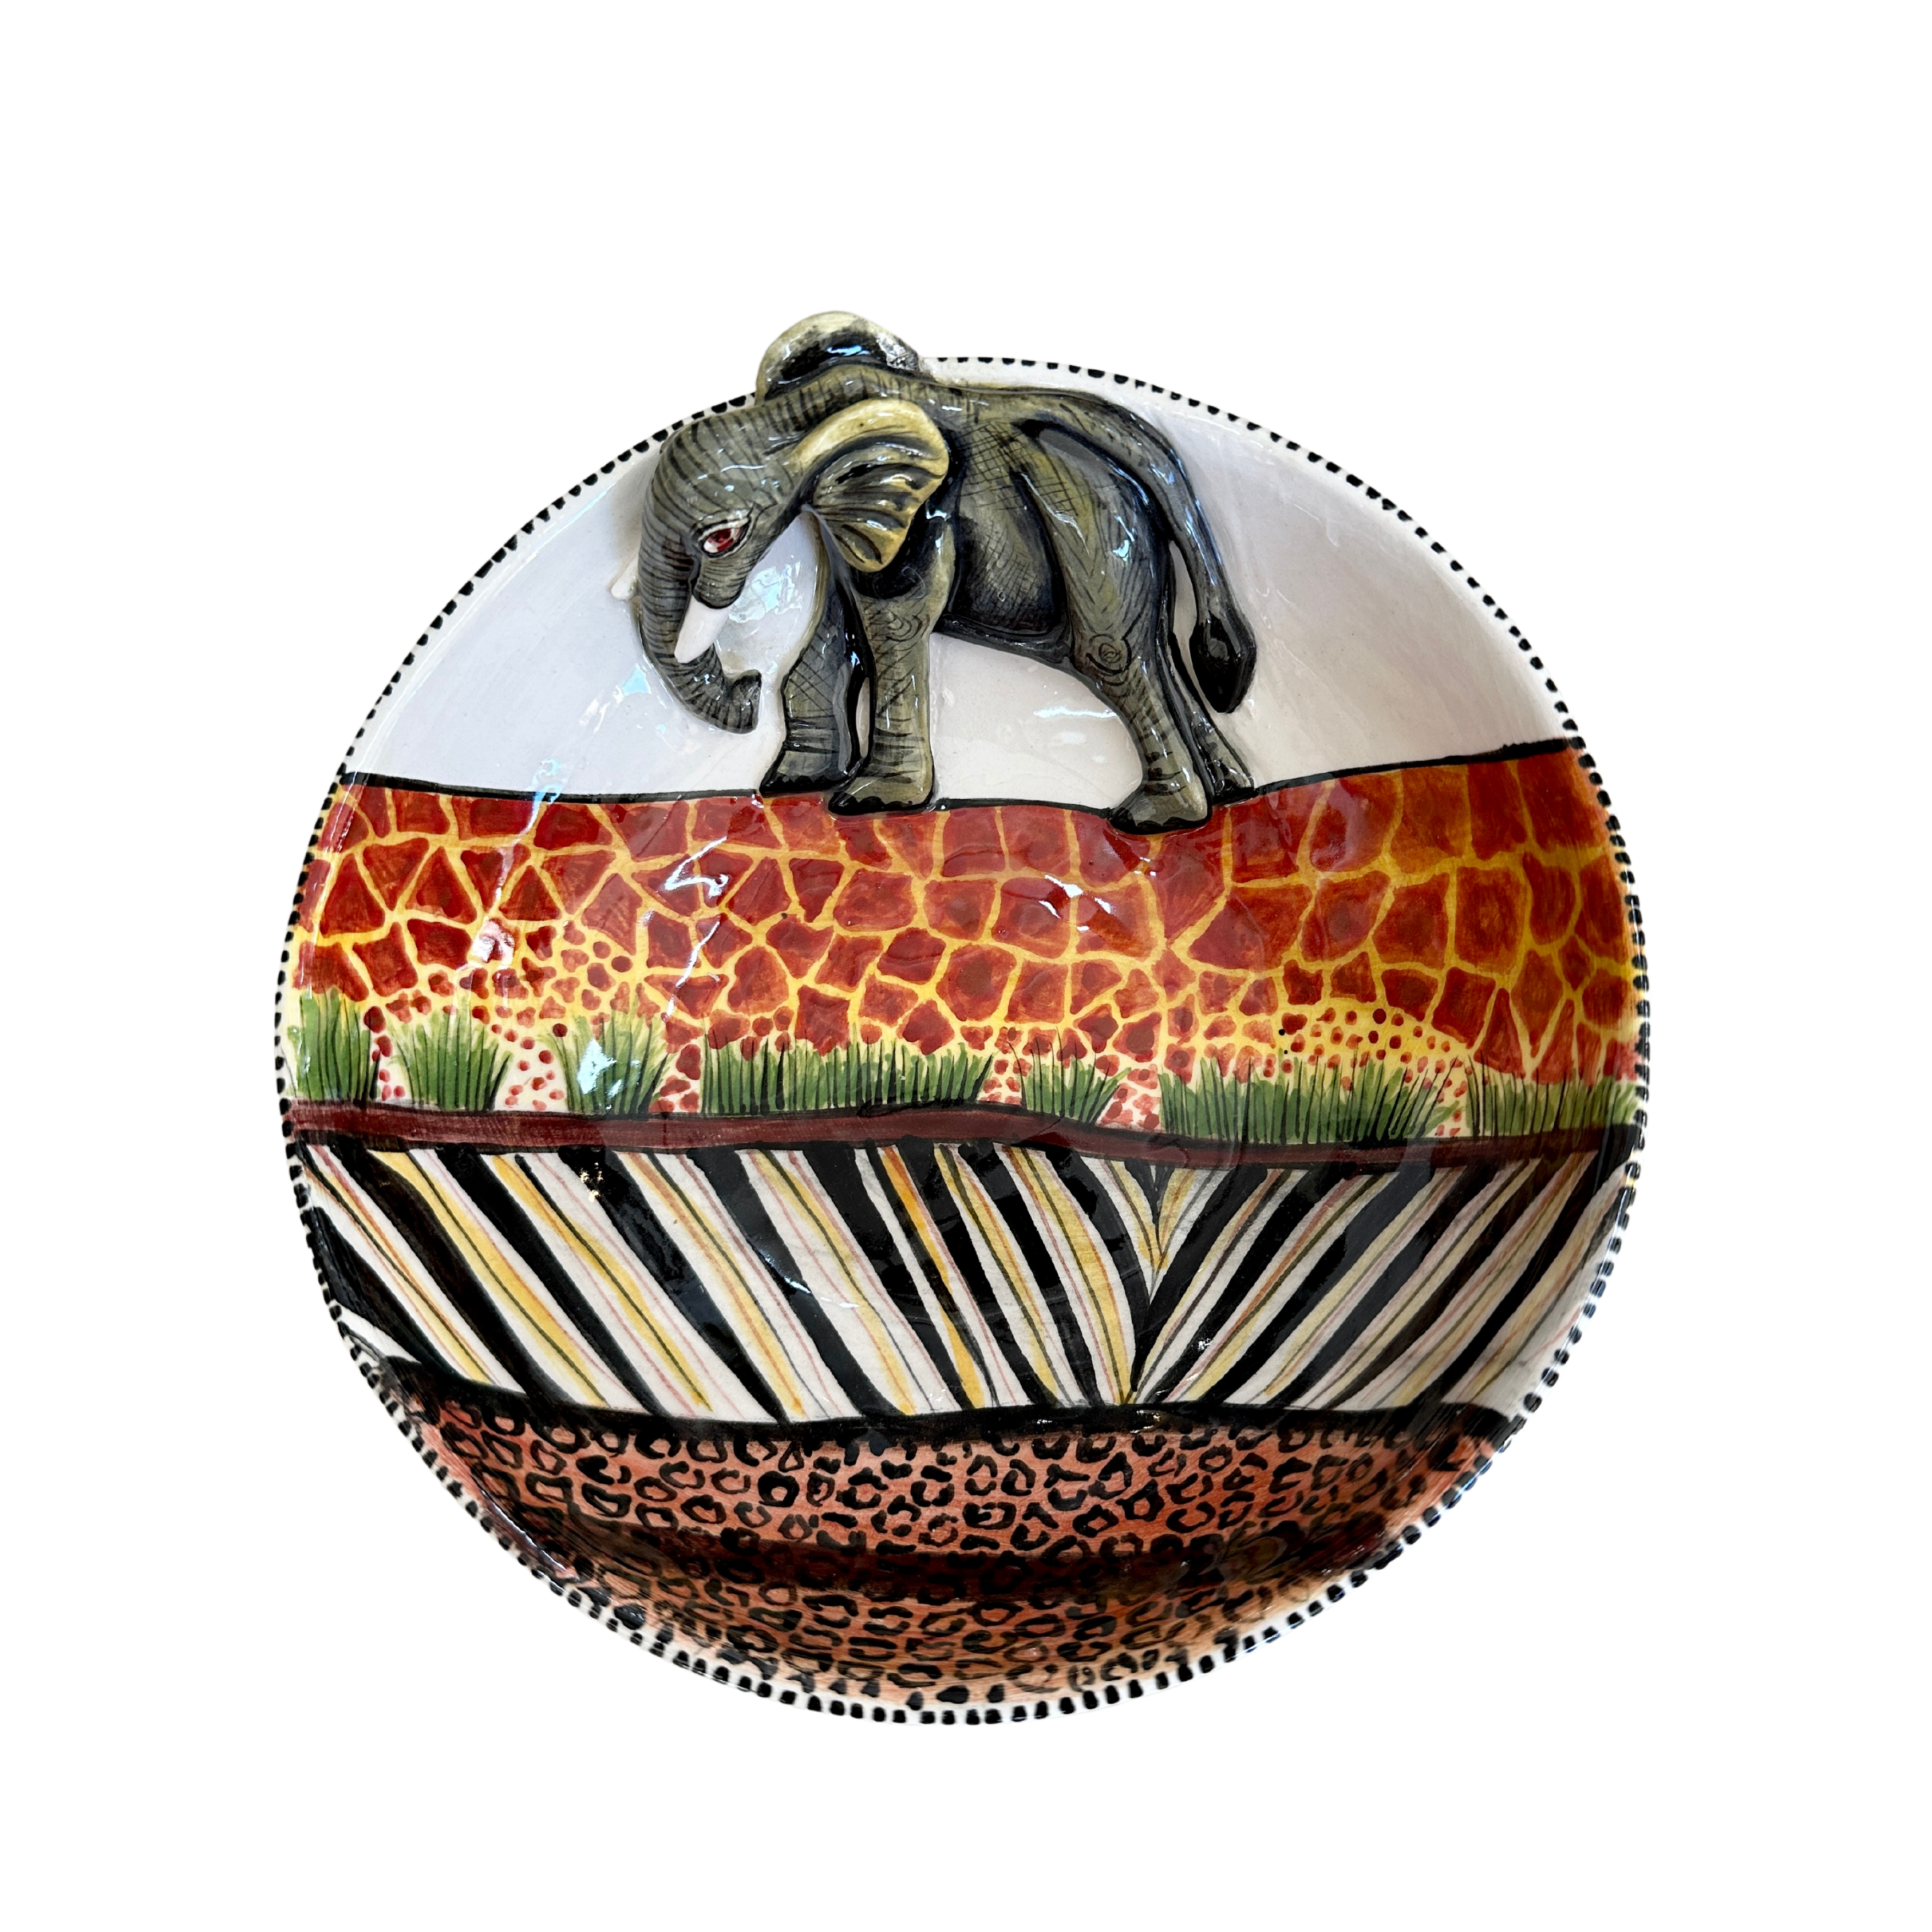 3D Animated Ceramic Elephant Bowl